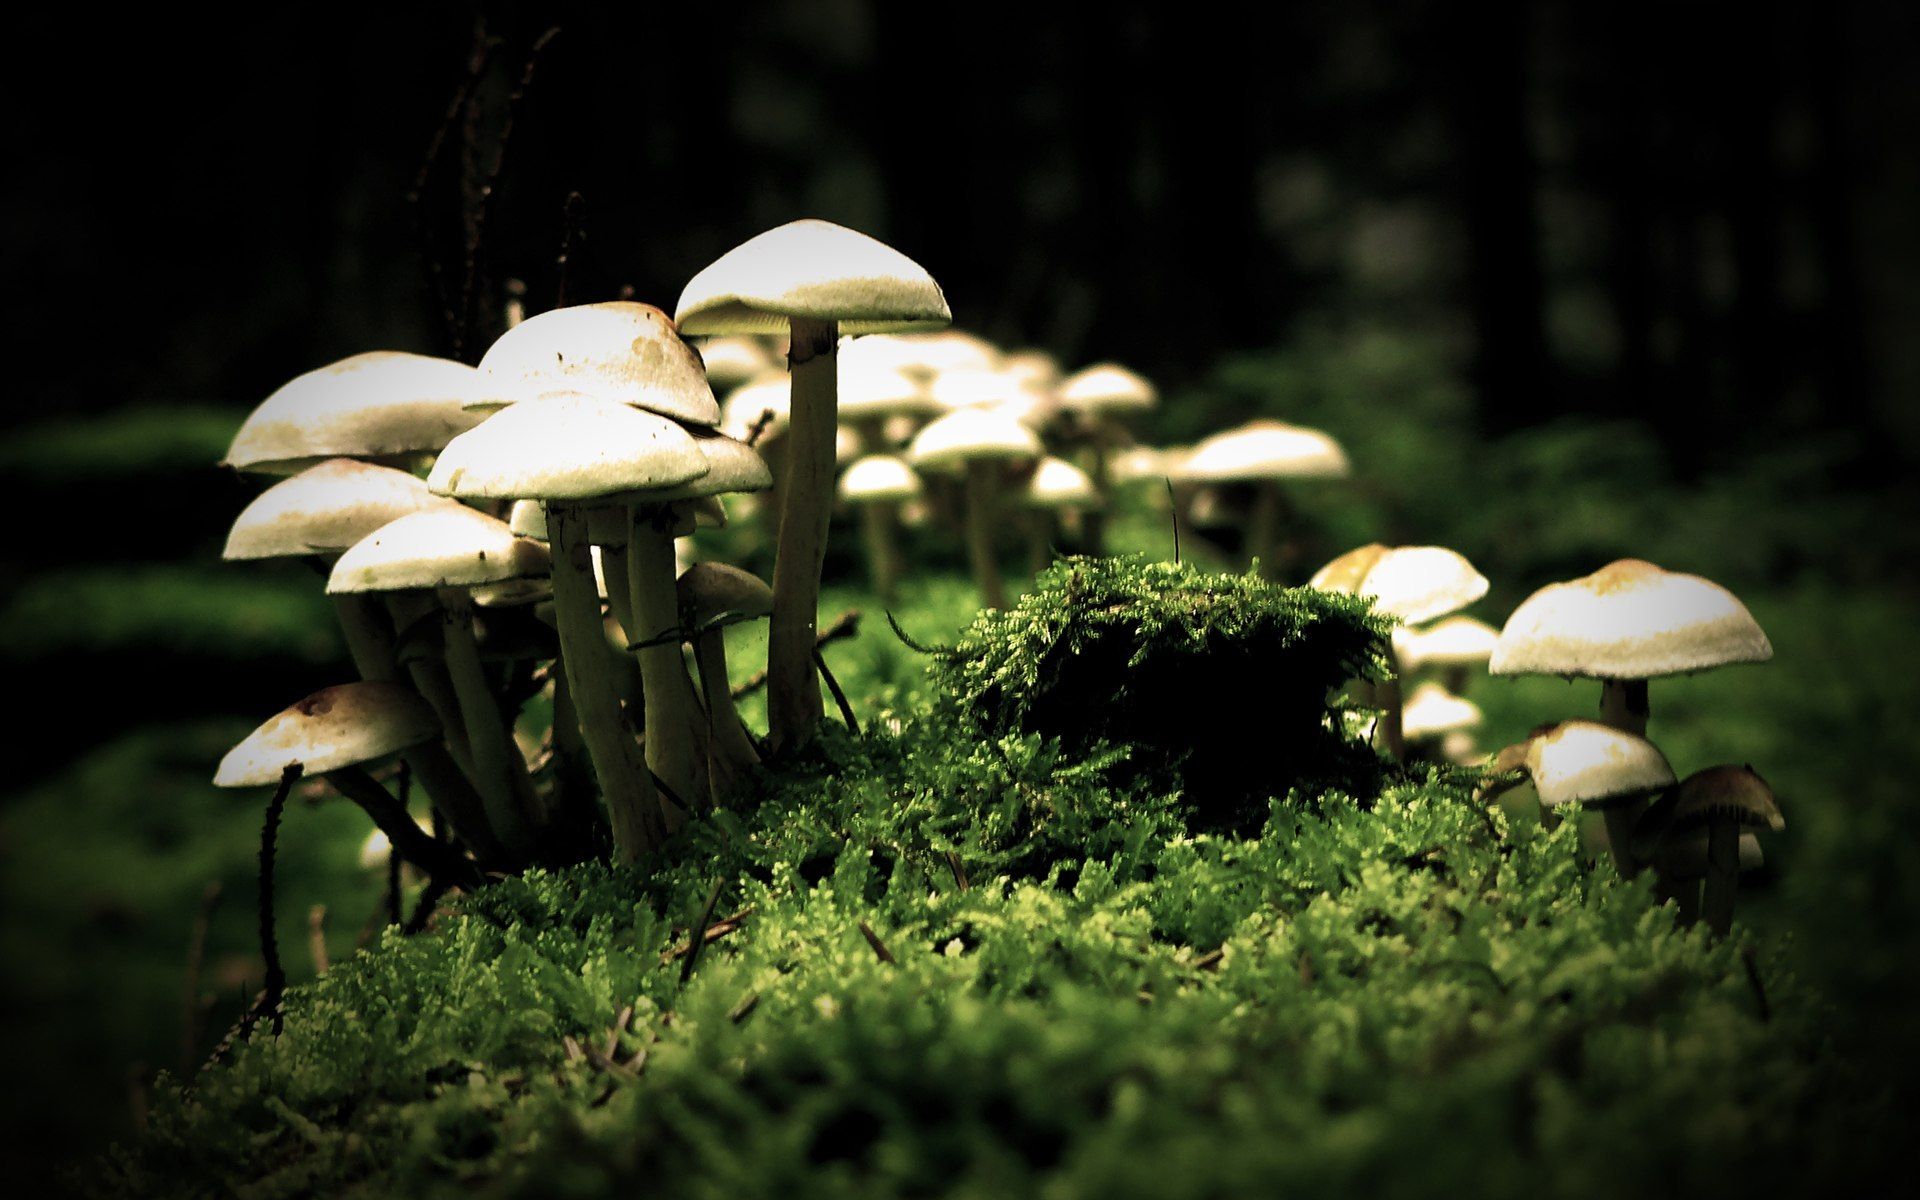 mushroom pictures images